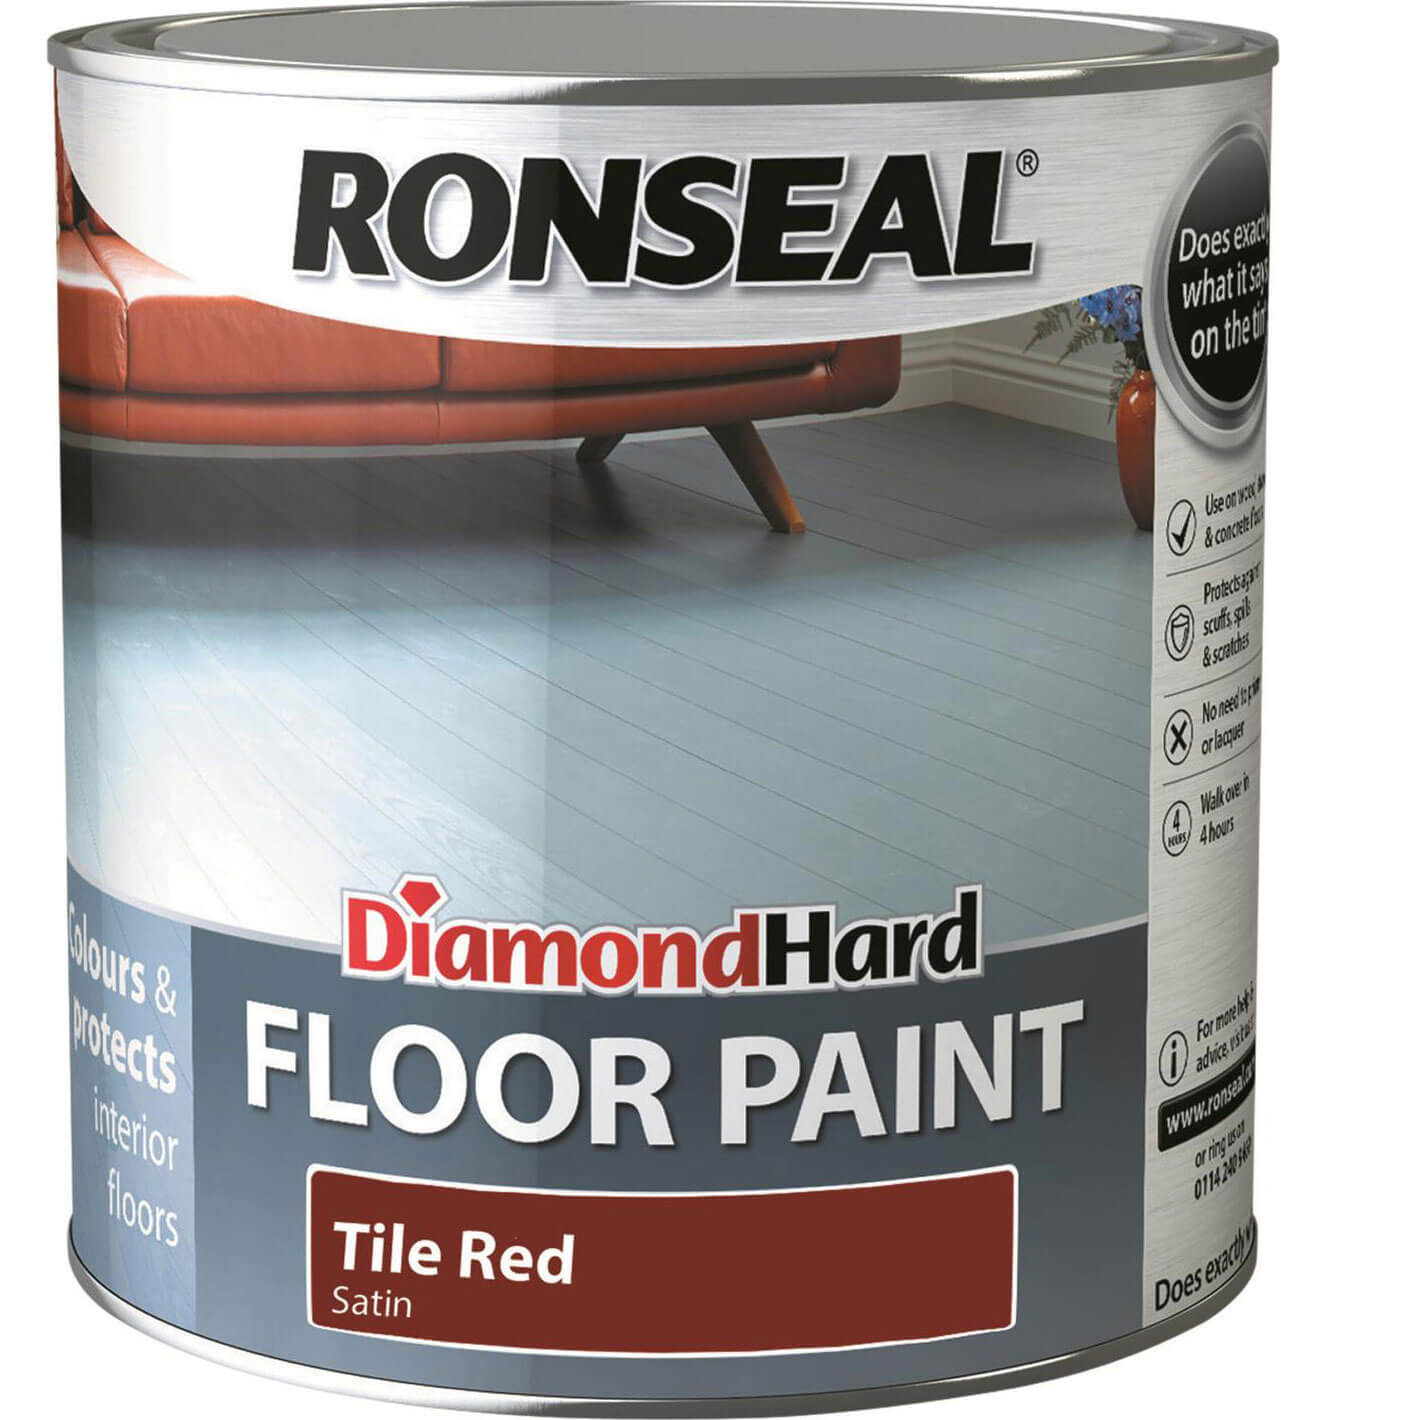 Ronseal Diamond Hard Floor Paint Tile Red 2.5l